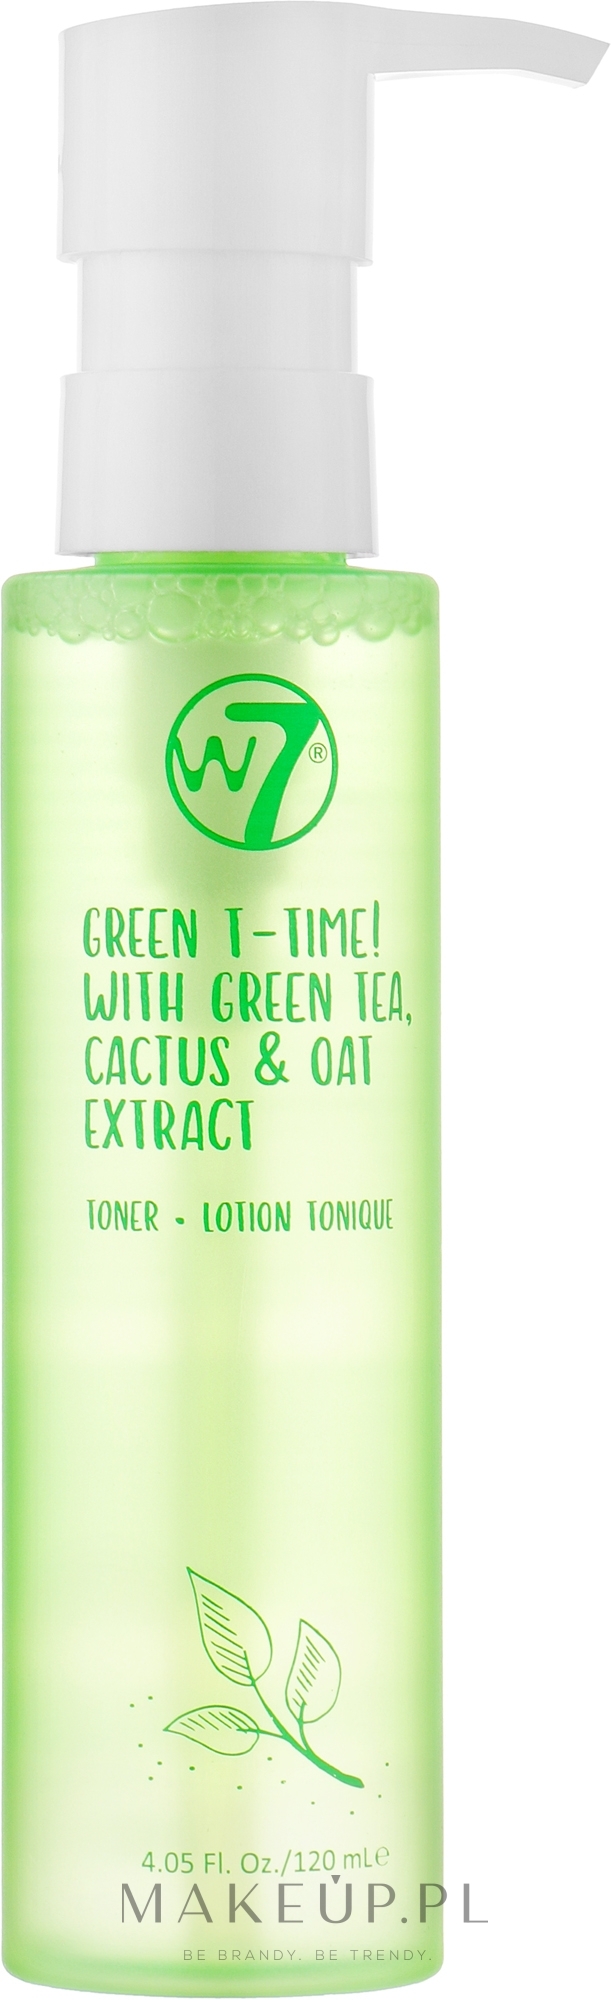 Tonik do twarzy - W7 Green T-Time With Green Tea Cactus & Oat Extract Toner — Zdjęcie 120 ml